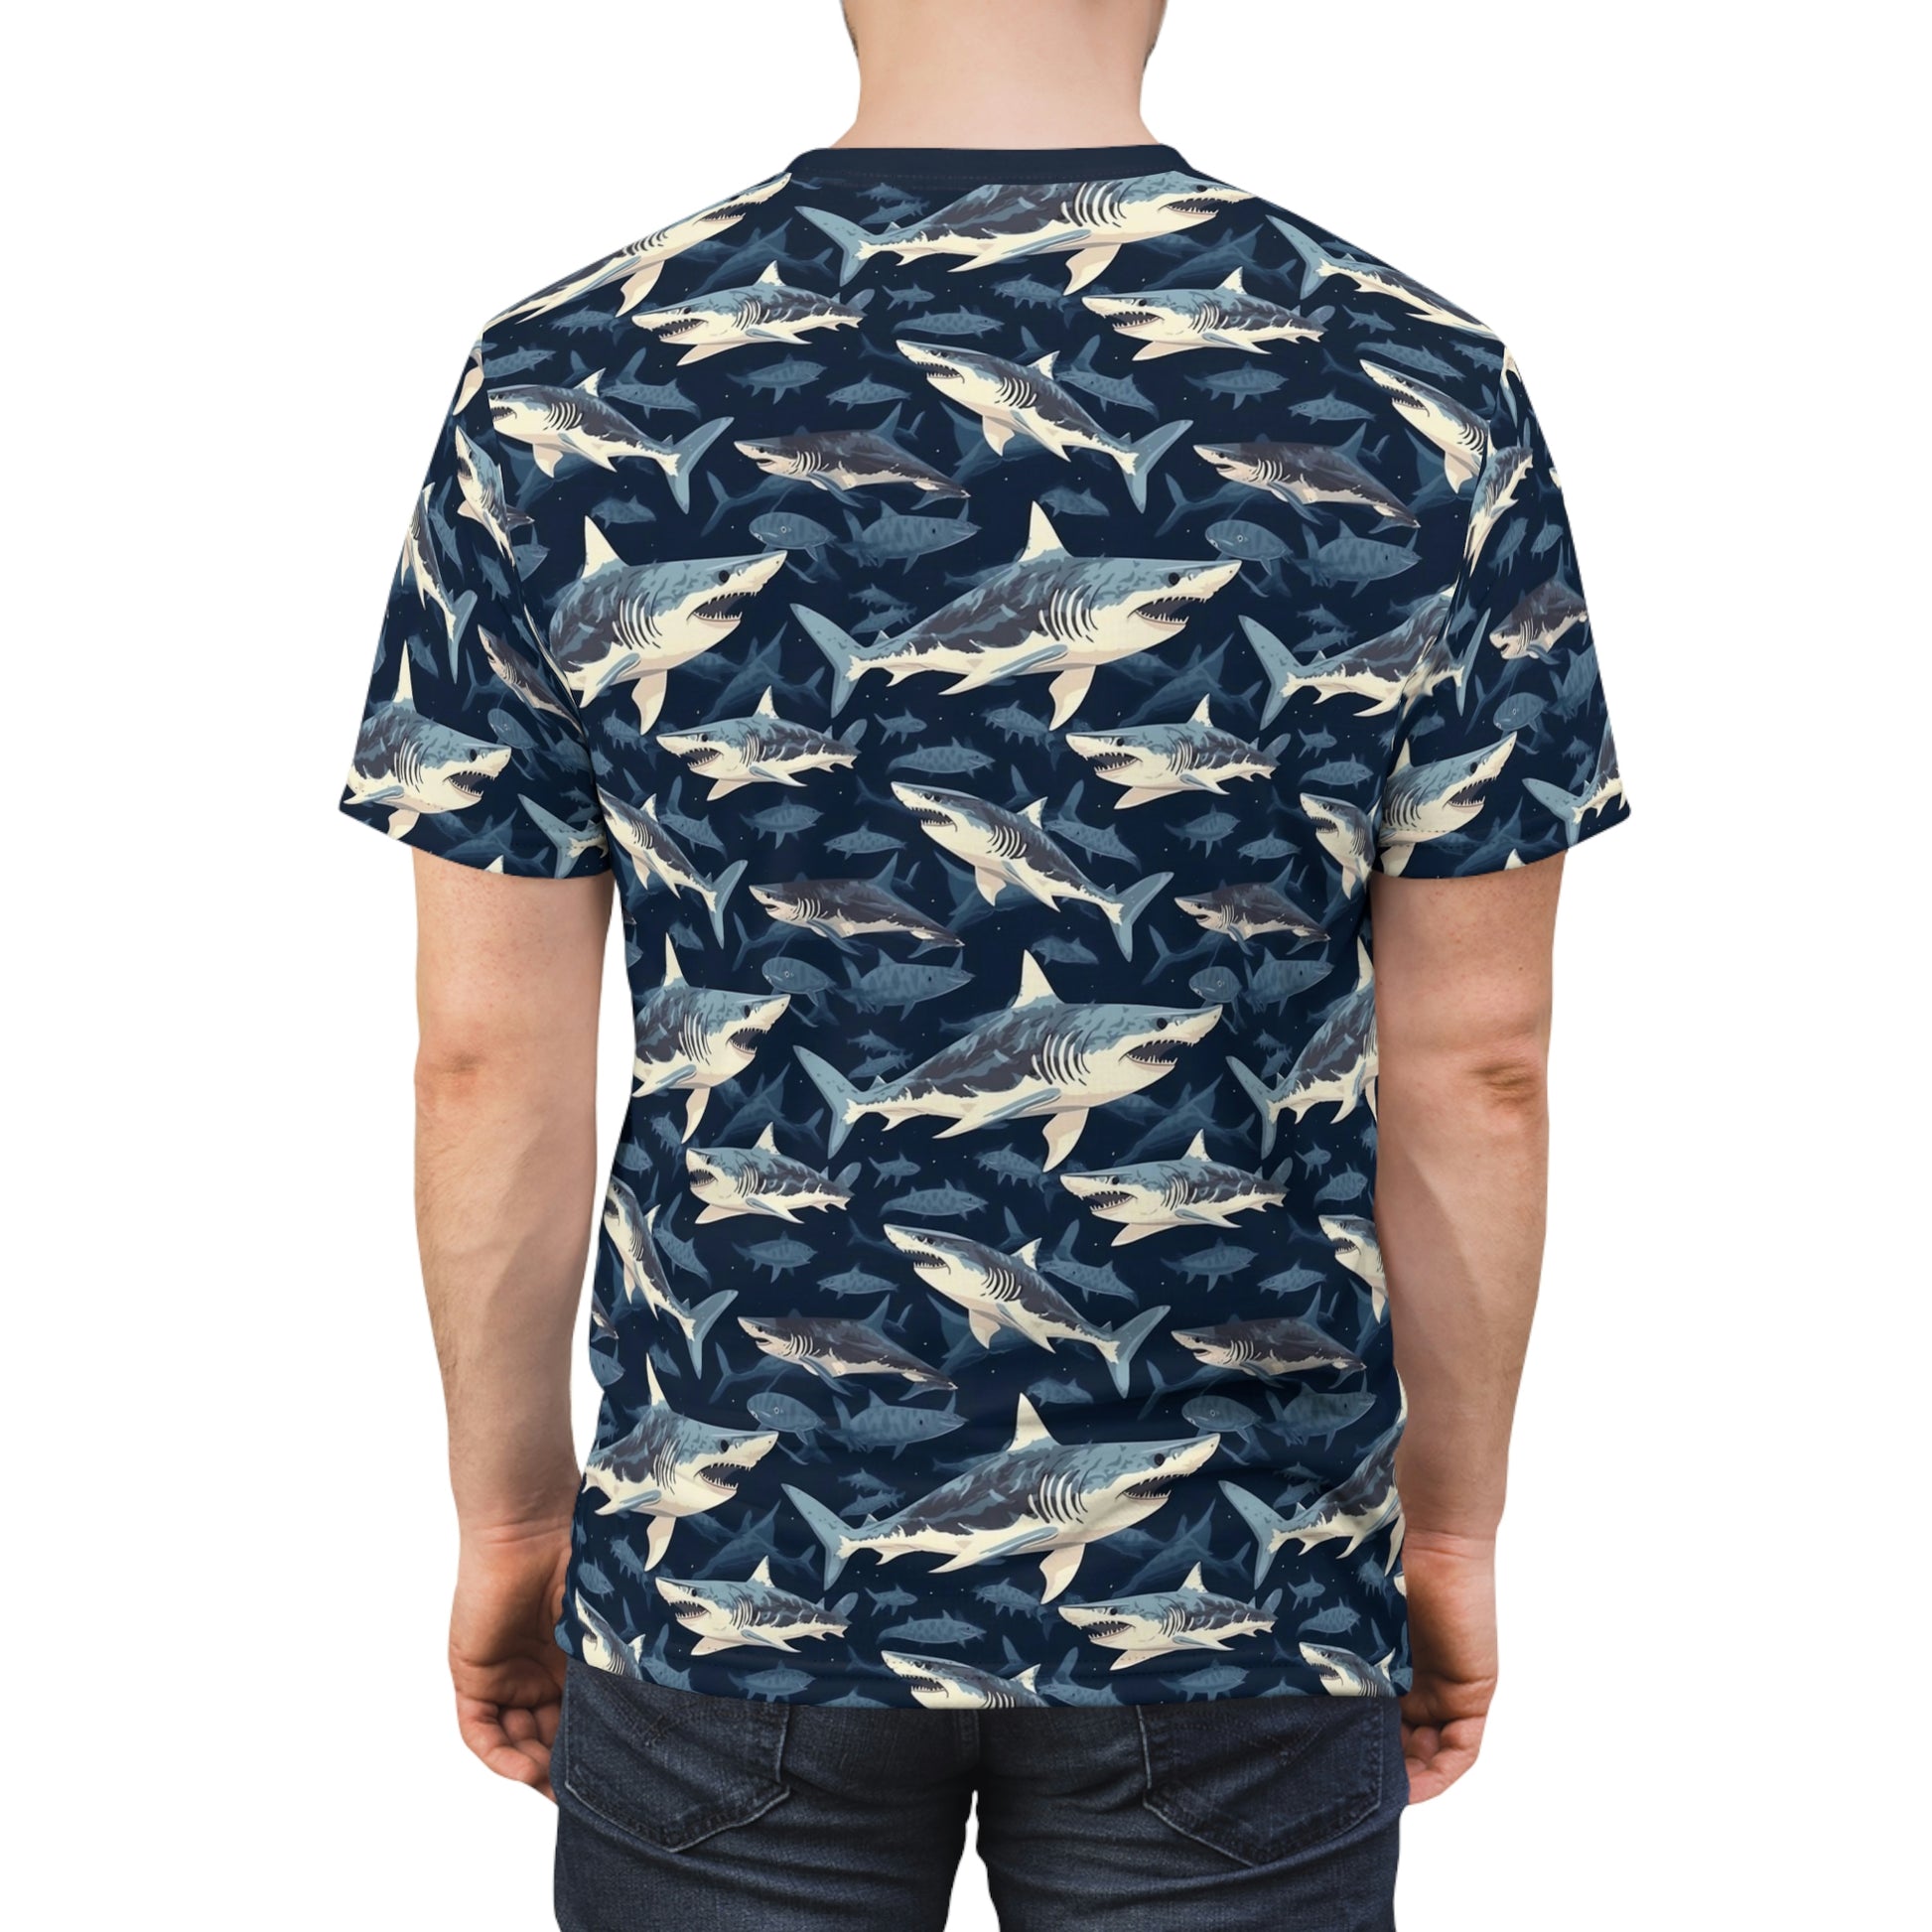 Great White Shark Men Tshirt, Blue Navy Ocean Sea Fish Designer Graphic Aesthetic Crewneck Unisex Tee Top Short Sleeve Shirt Starcove Fashion